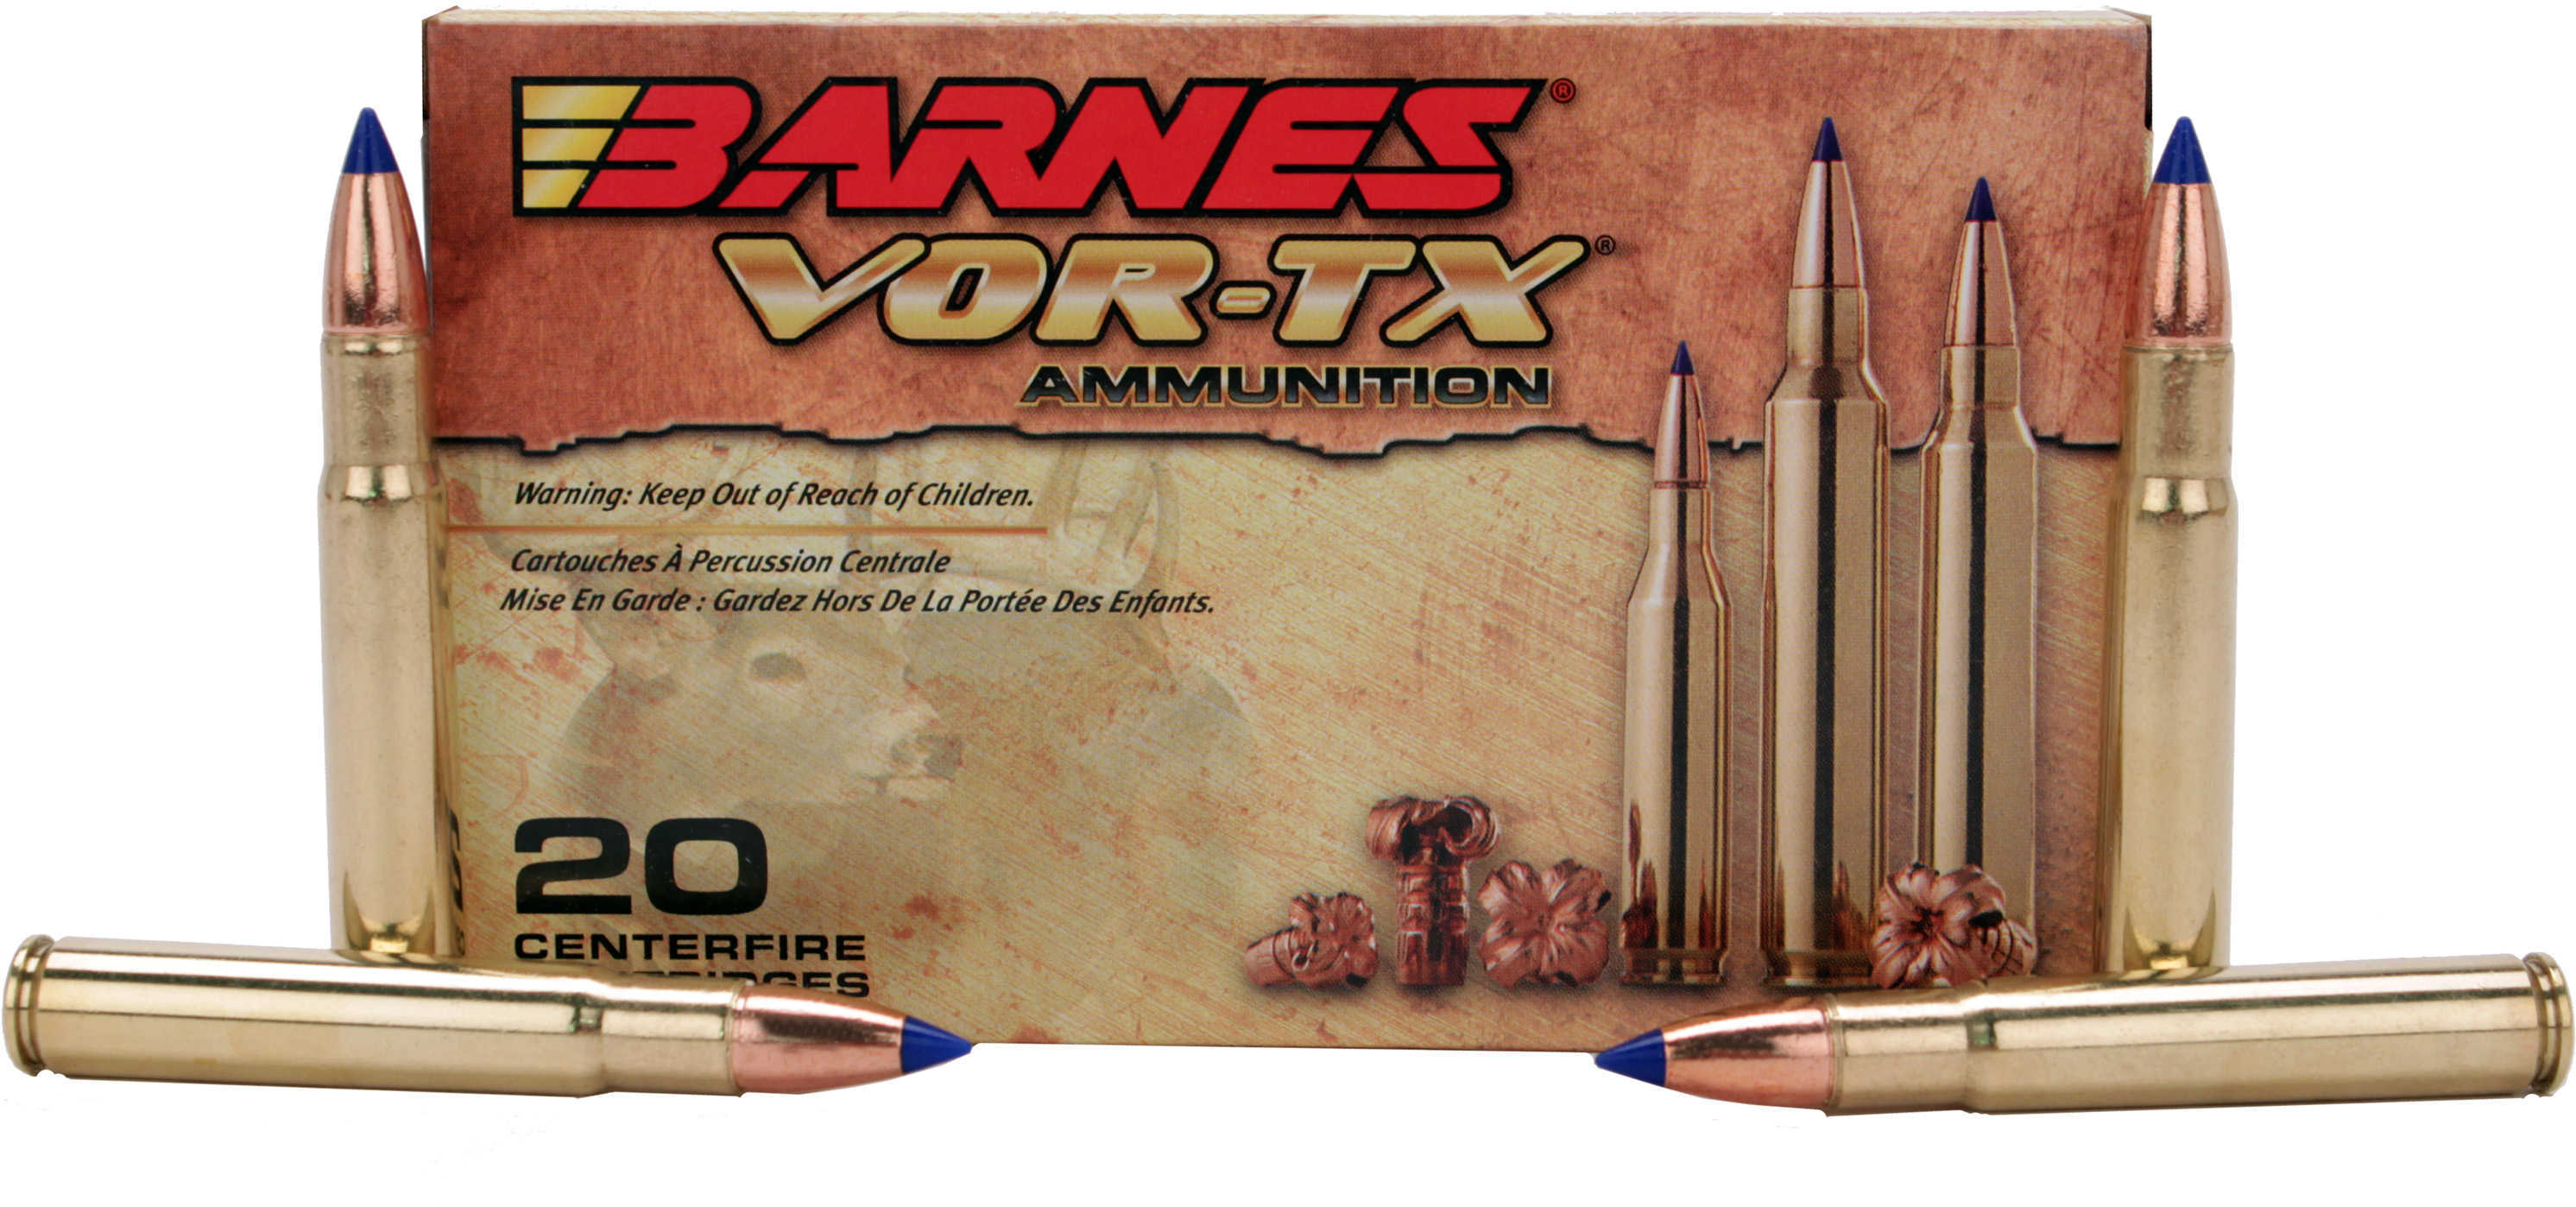 Barnes VOR-Tx Rifle Ammunition .35 Whelen 180 Gr TSXFB 2900 Fps - 20/Box